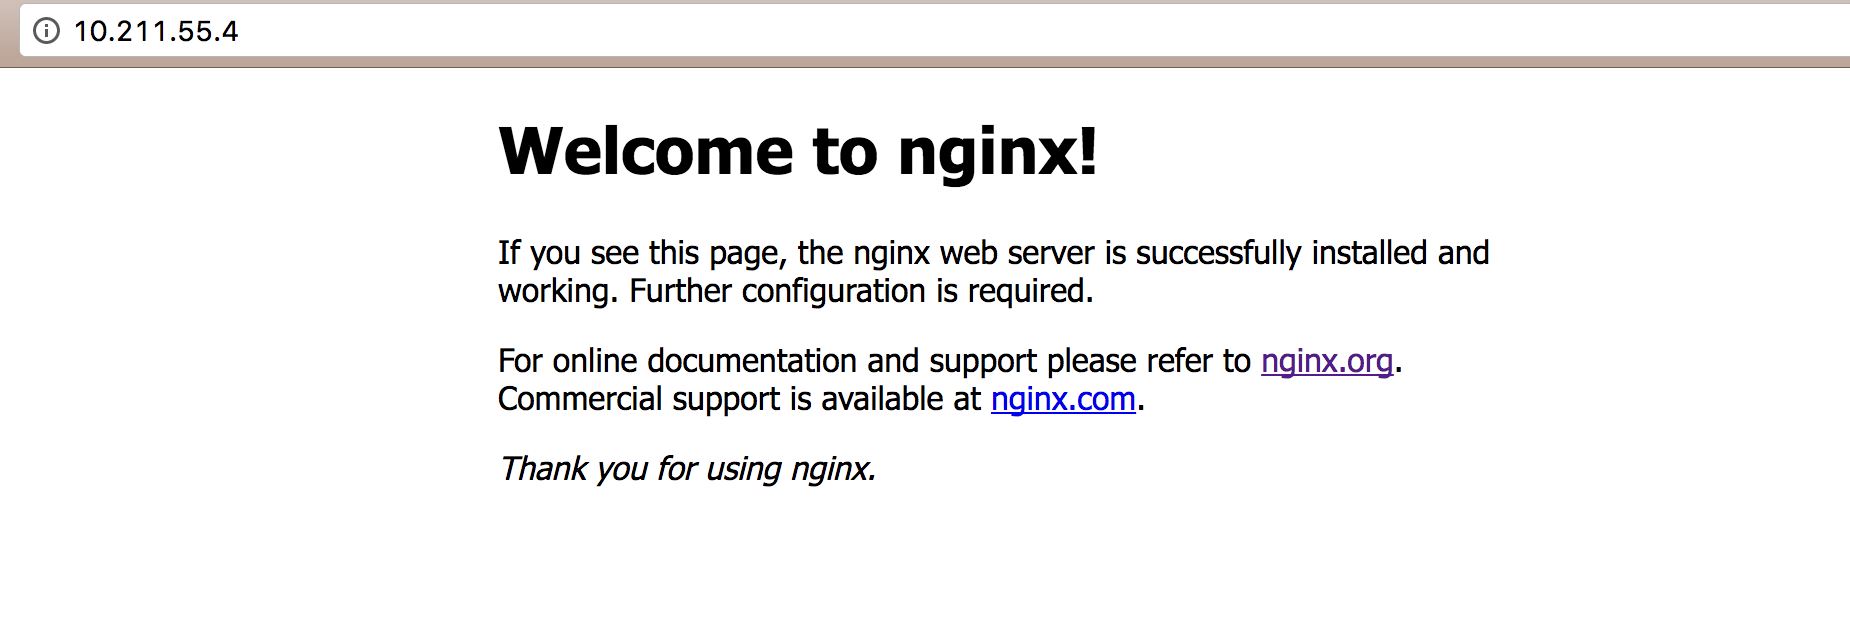 Centos如何通过Nginx和vsftpd构建图片服务器